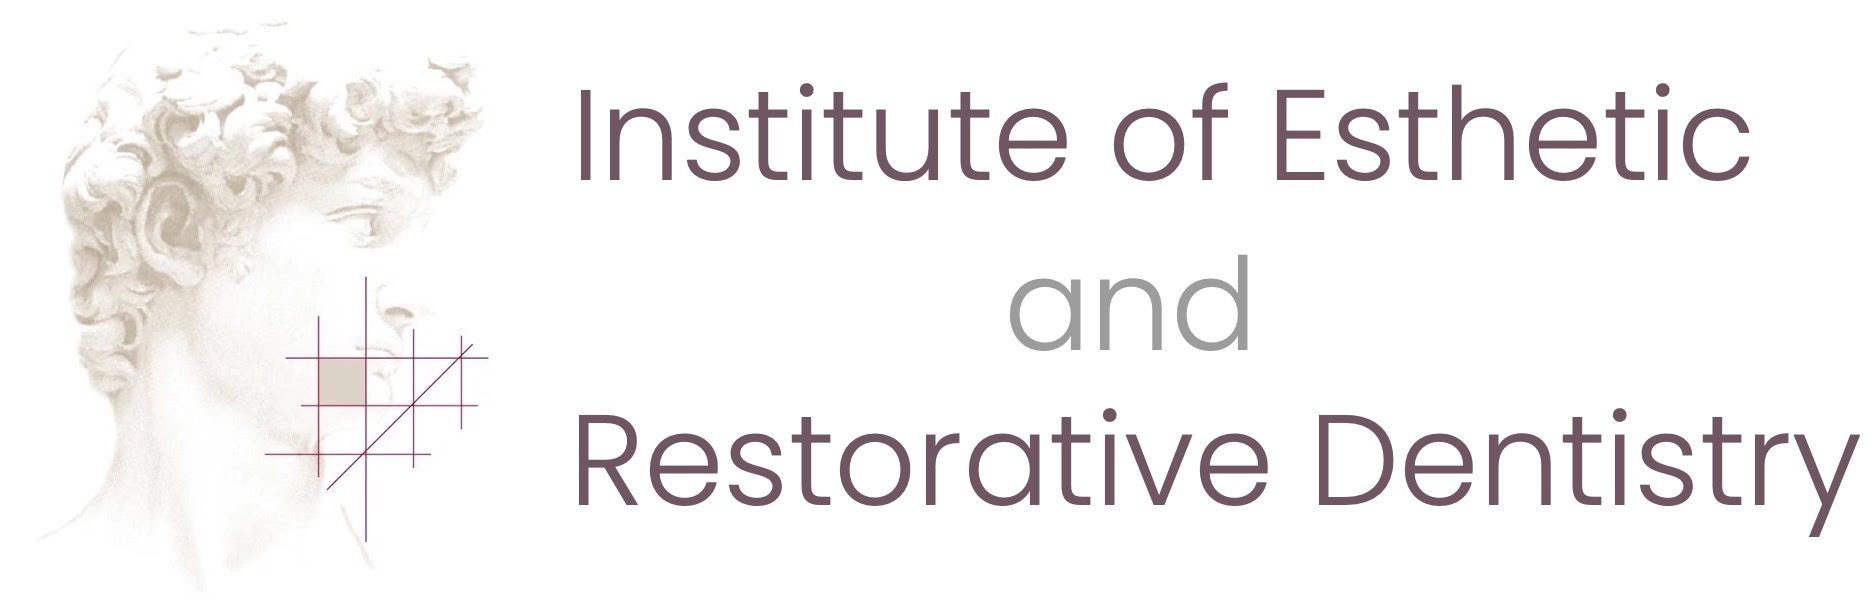 Institute of Esthetic and Restorative Dentistry